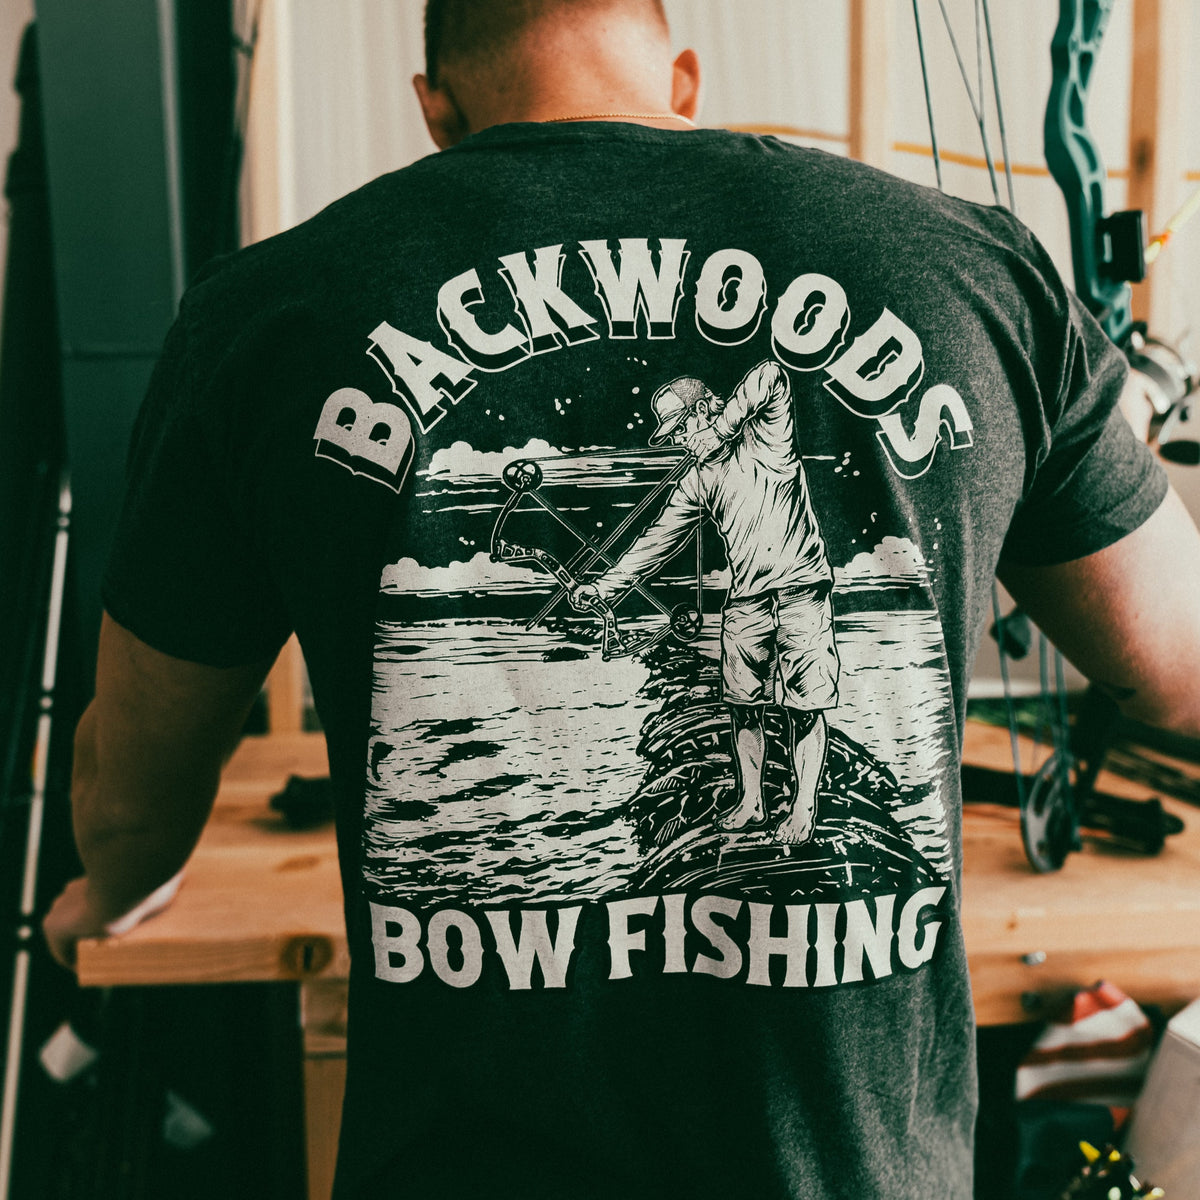 Outlaw Bowfishing